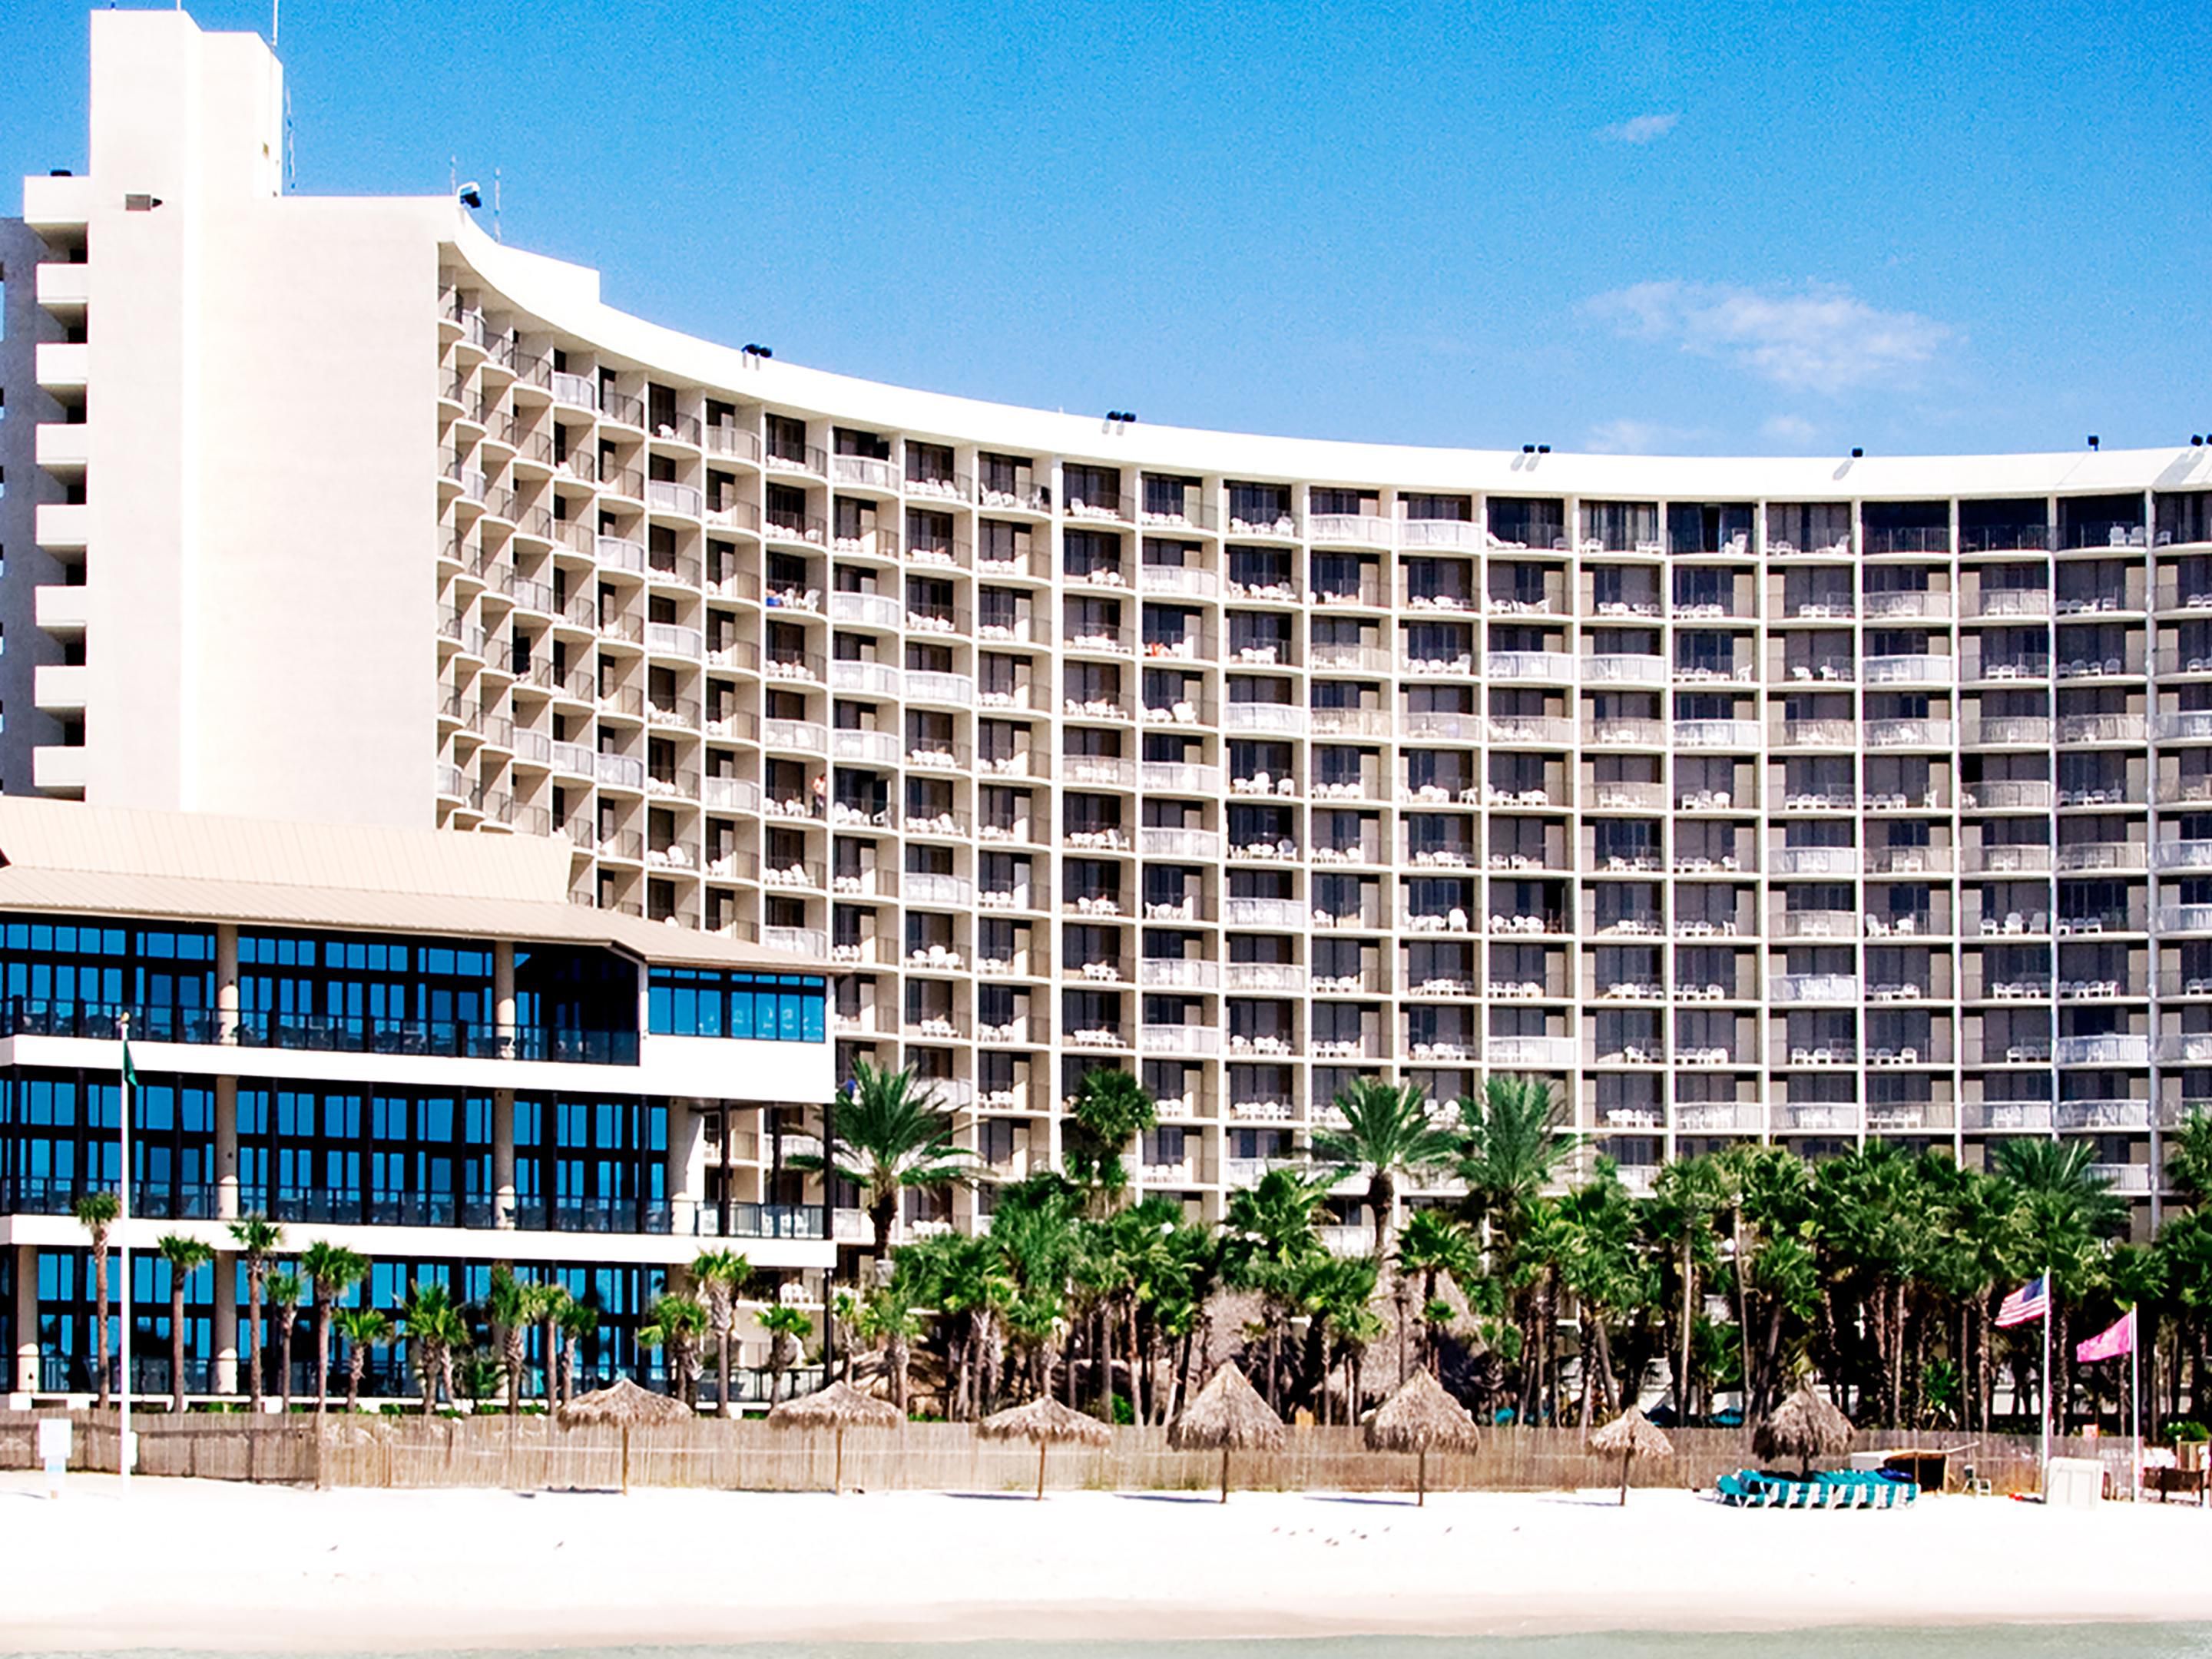 Holiday Inn Resort Panama City Beach 3310577400 4x3